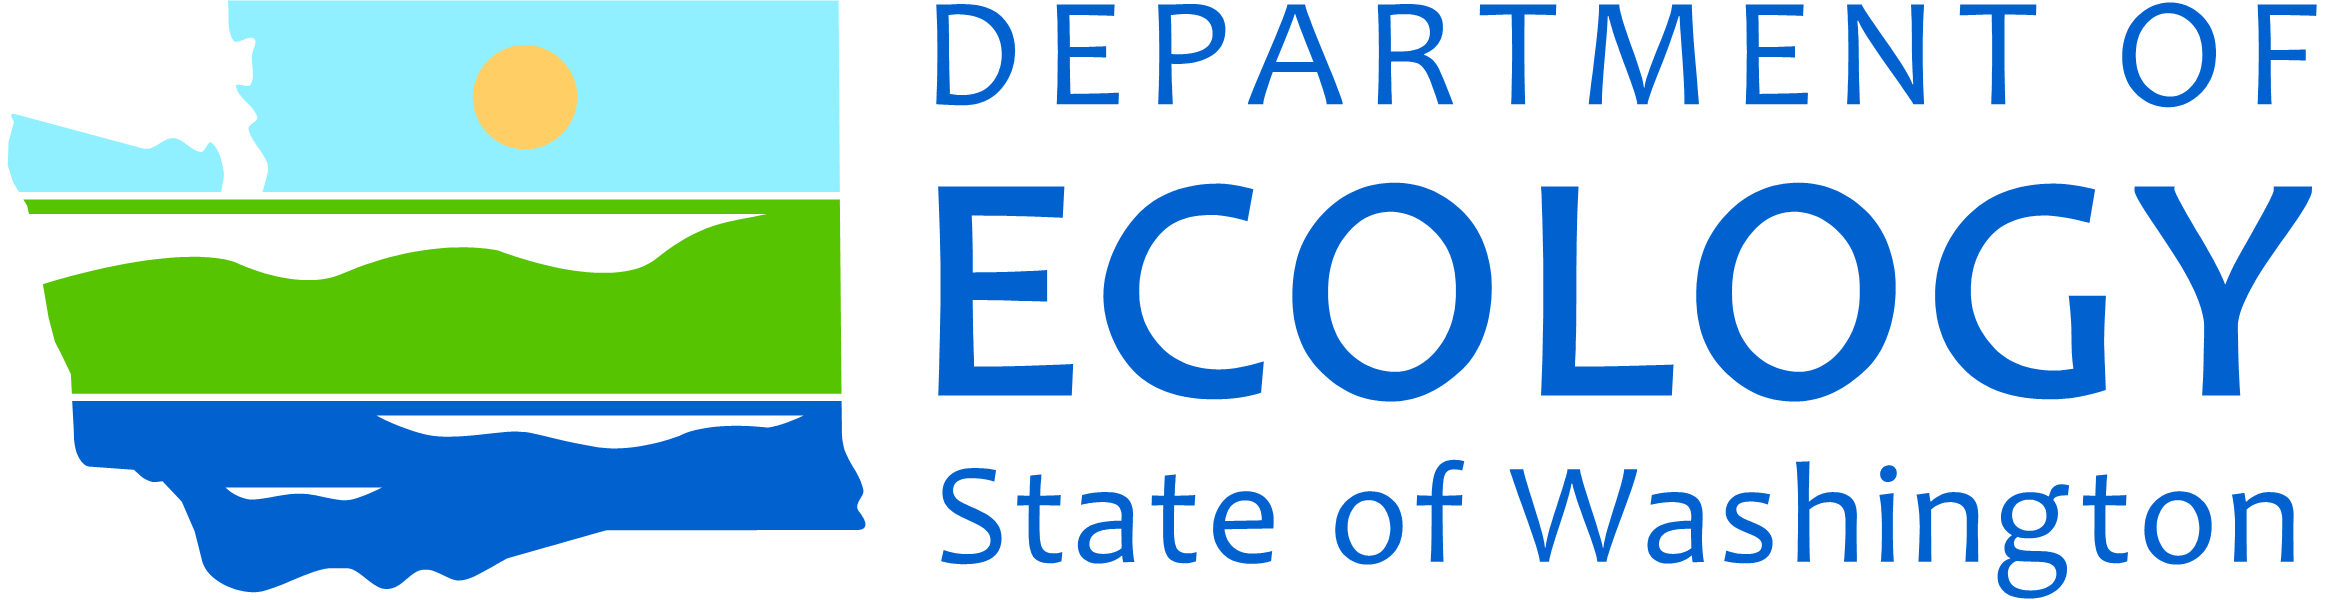 WA State Logo - dept of ecology WA logo - 610 KONA